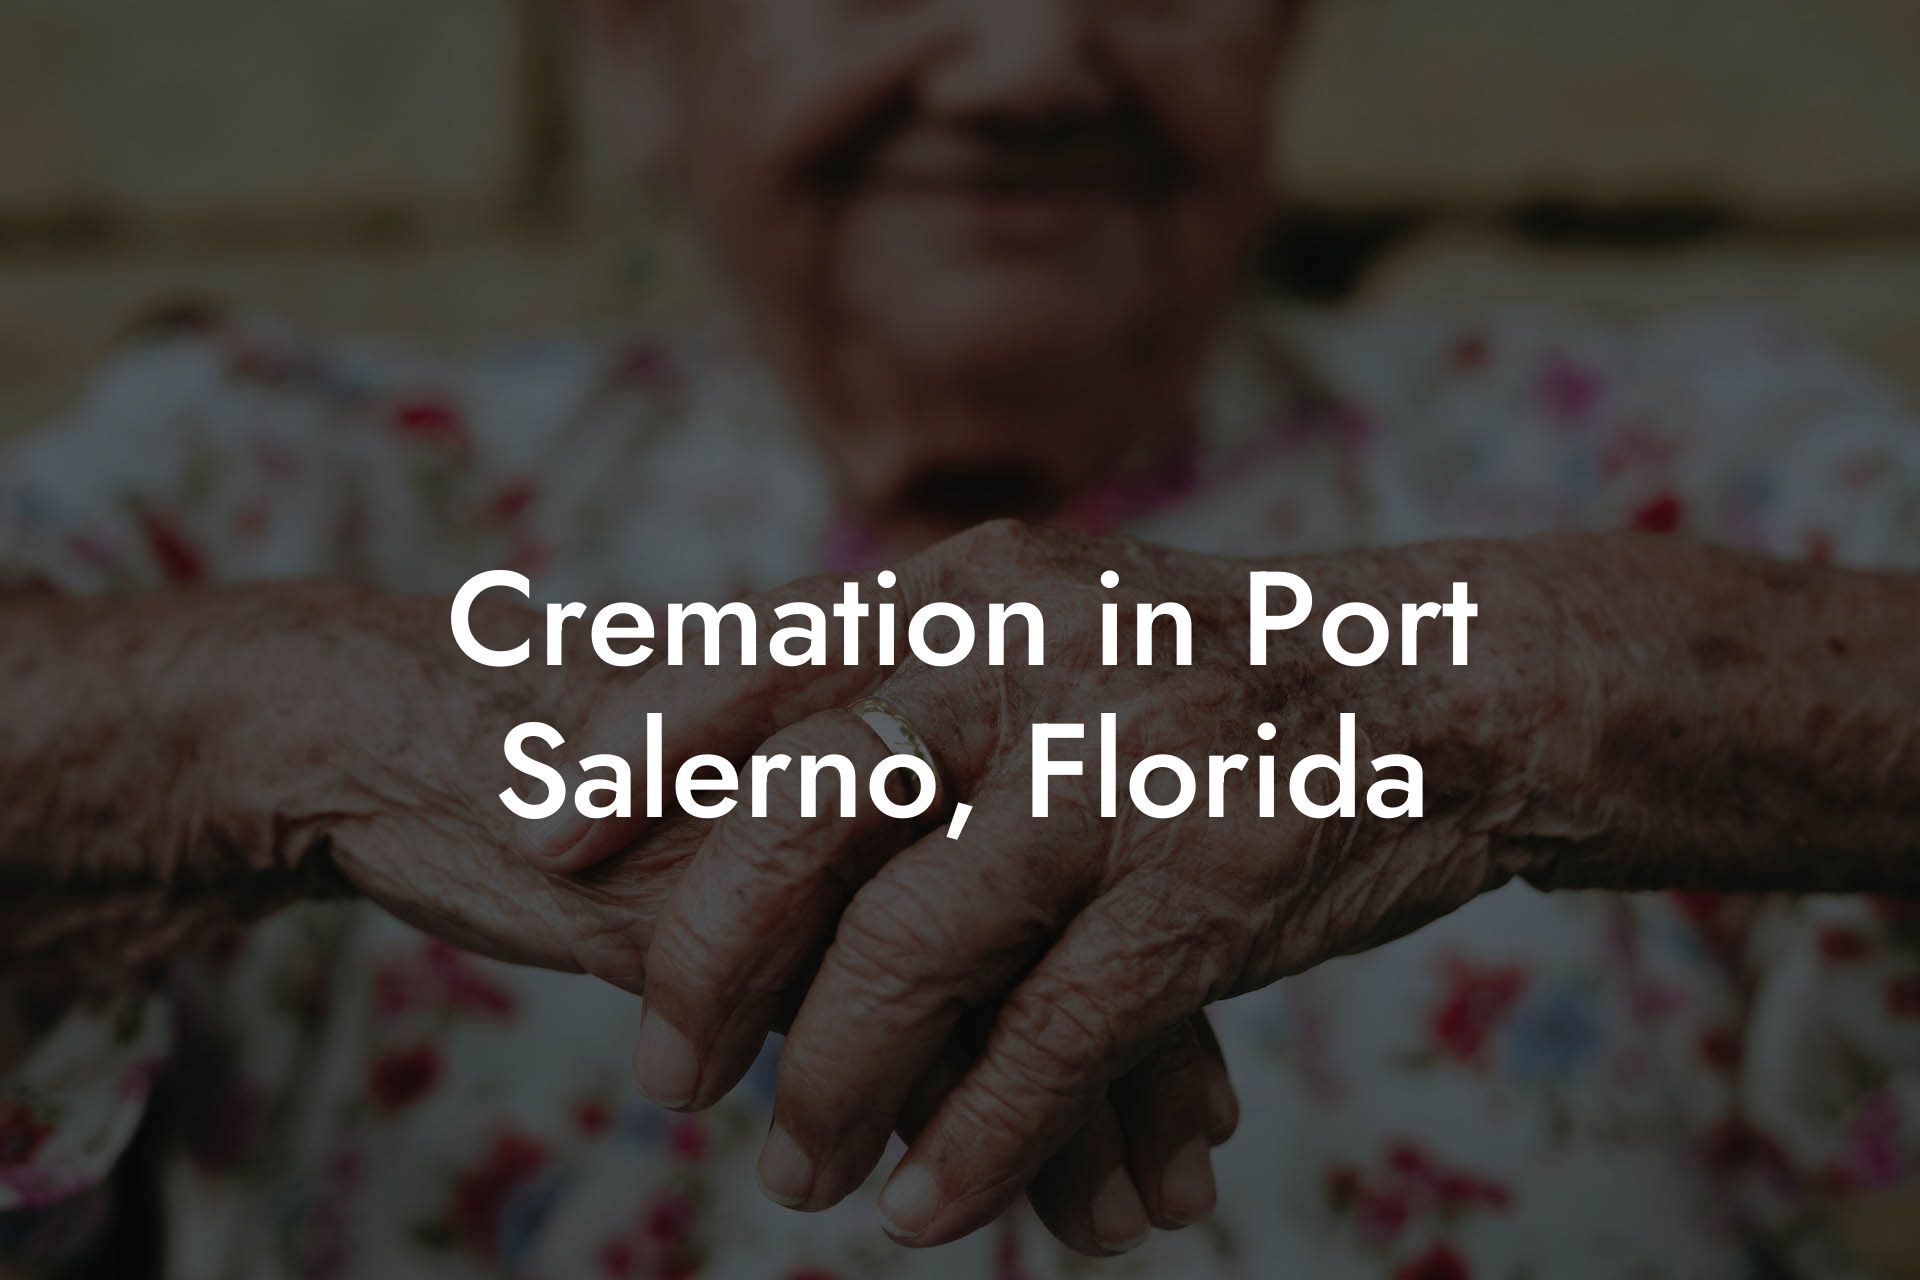 Cremation in Port Salerno, Florida